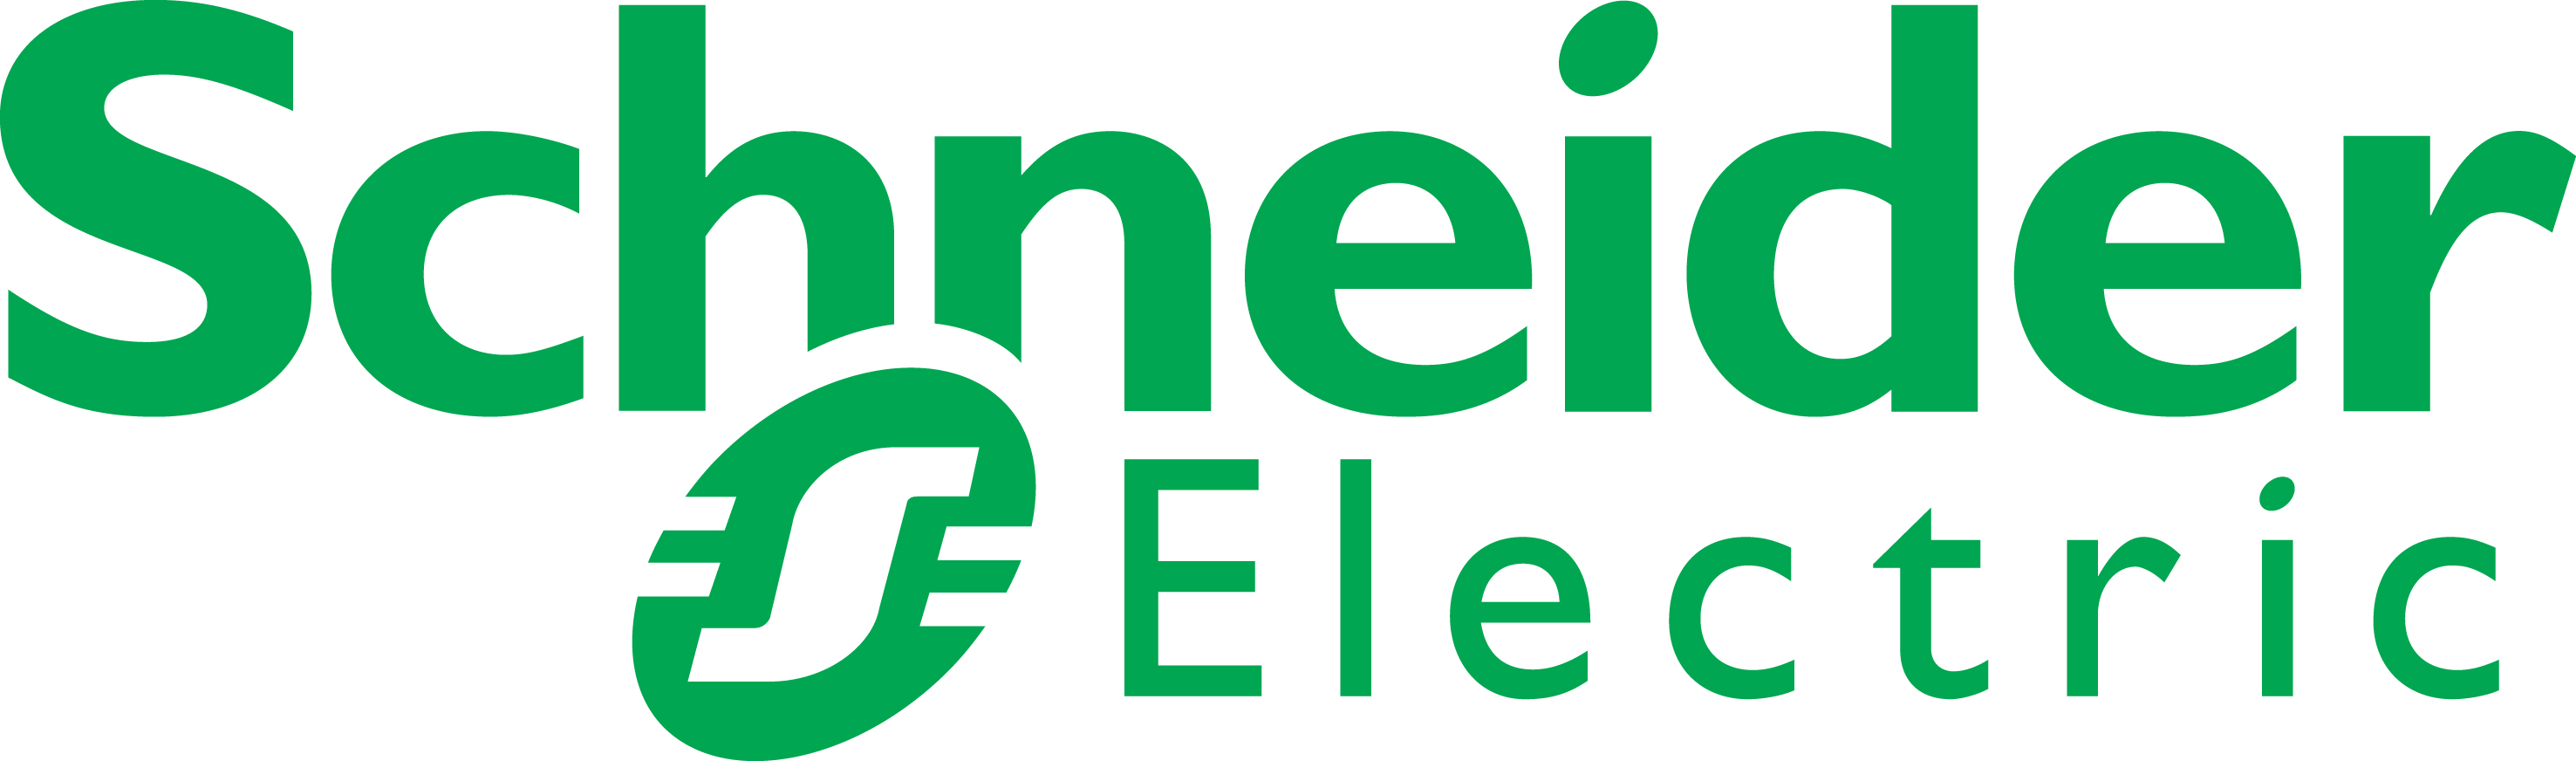 File:Schneider-Electric-Logo.jpg - Wikimedia Commons